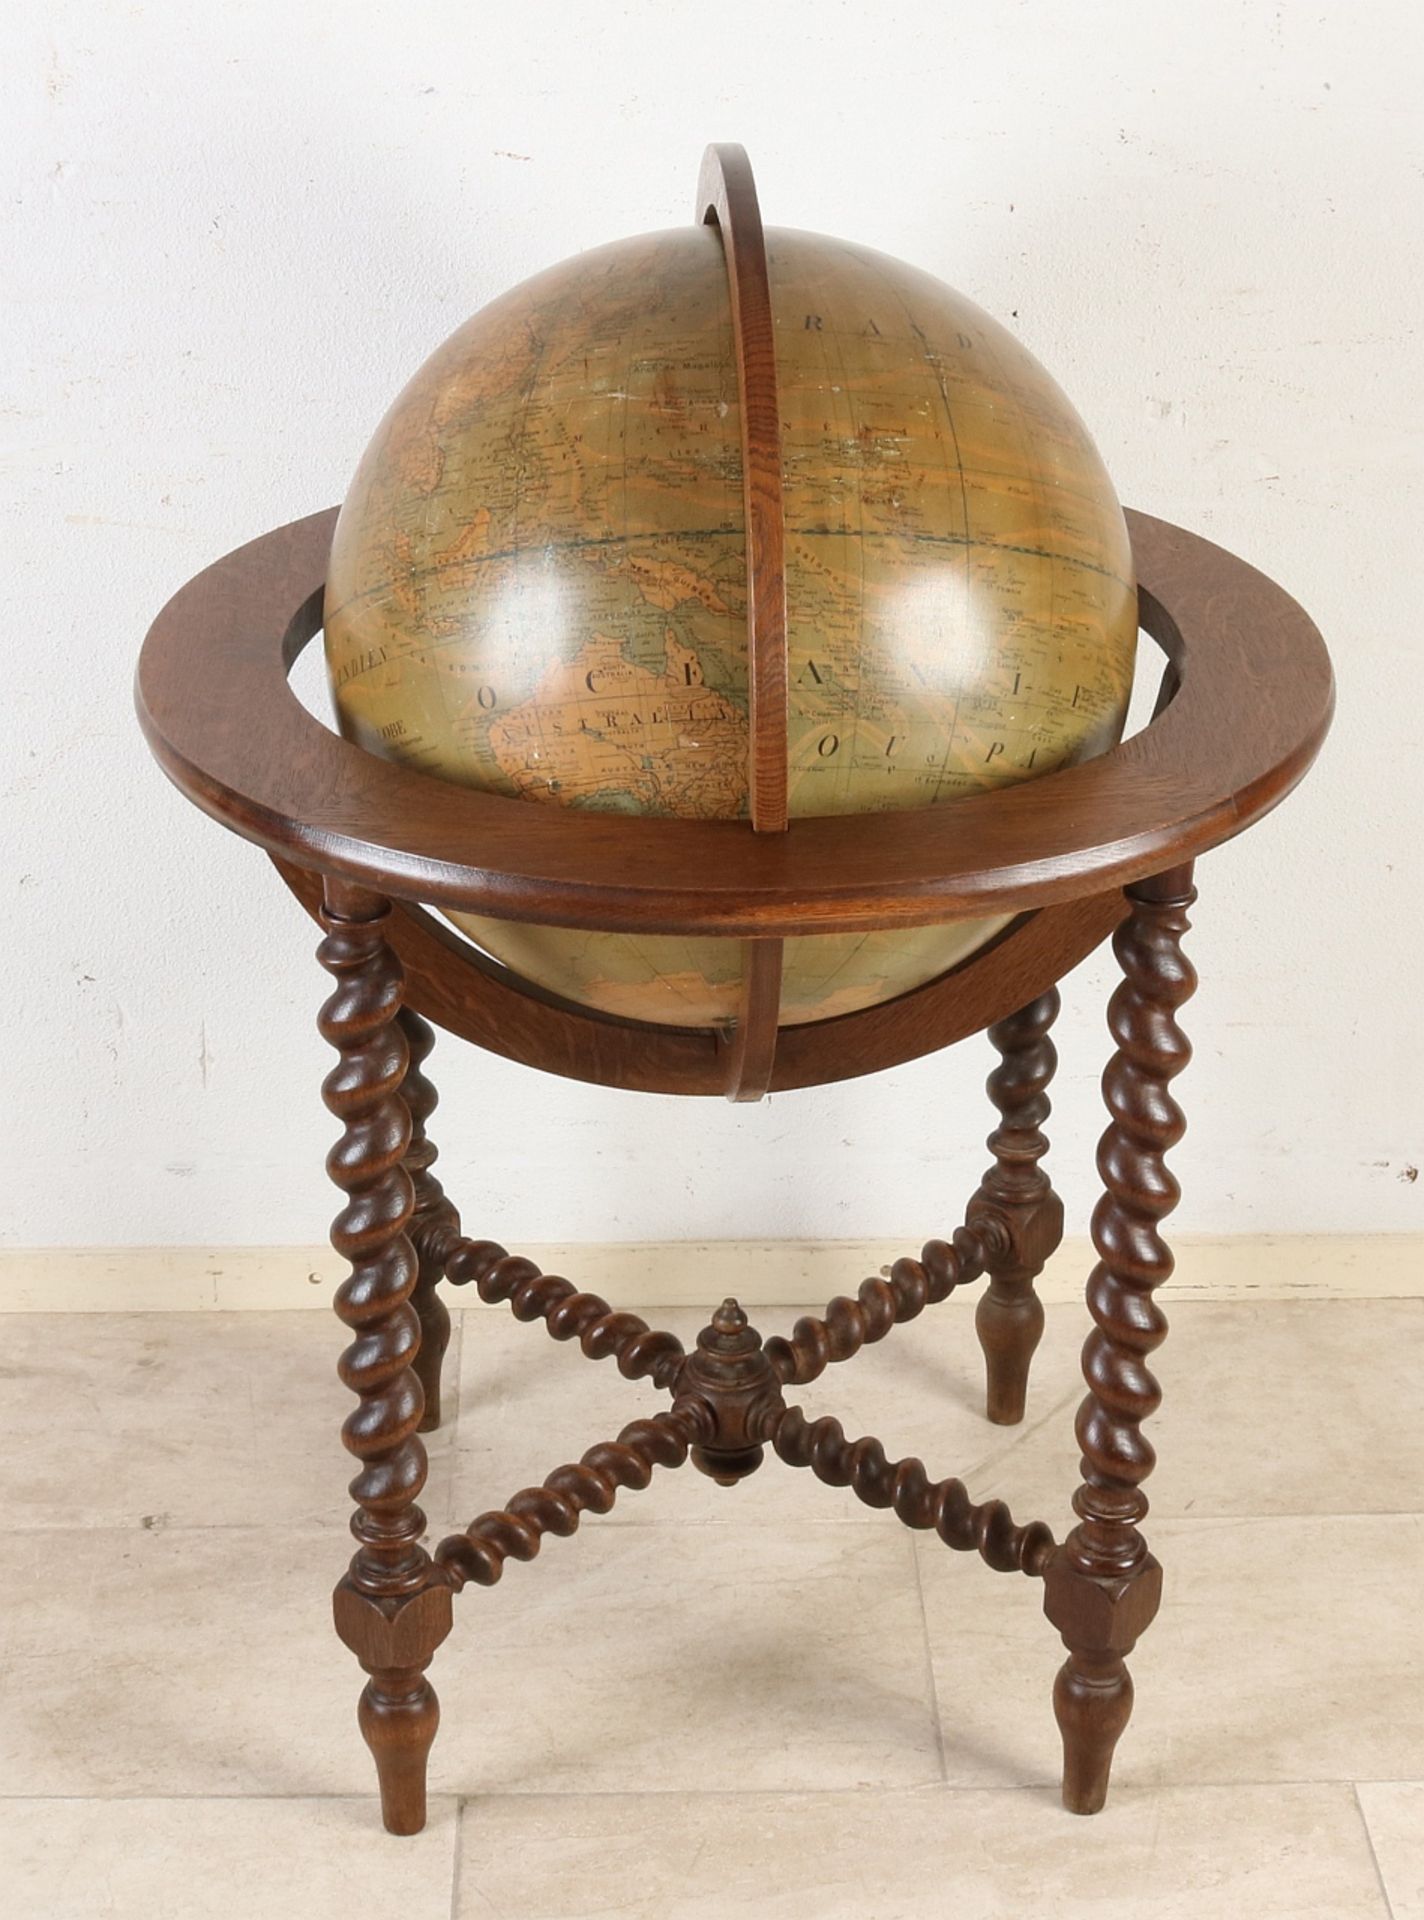 Antique globe in holder, 1900 - Image 2 of 4